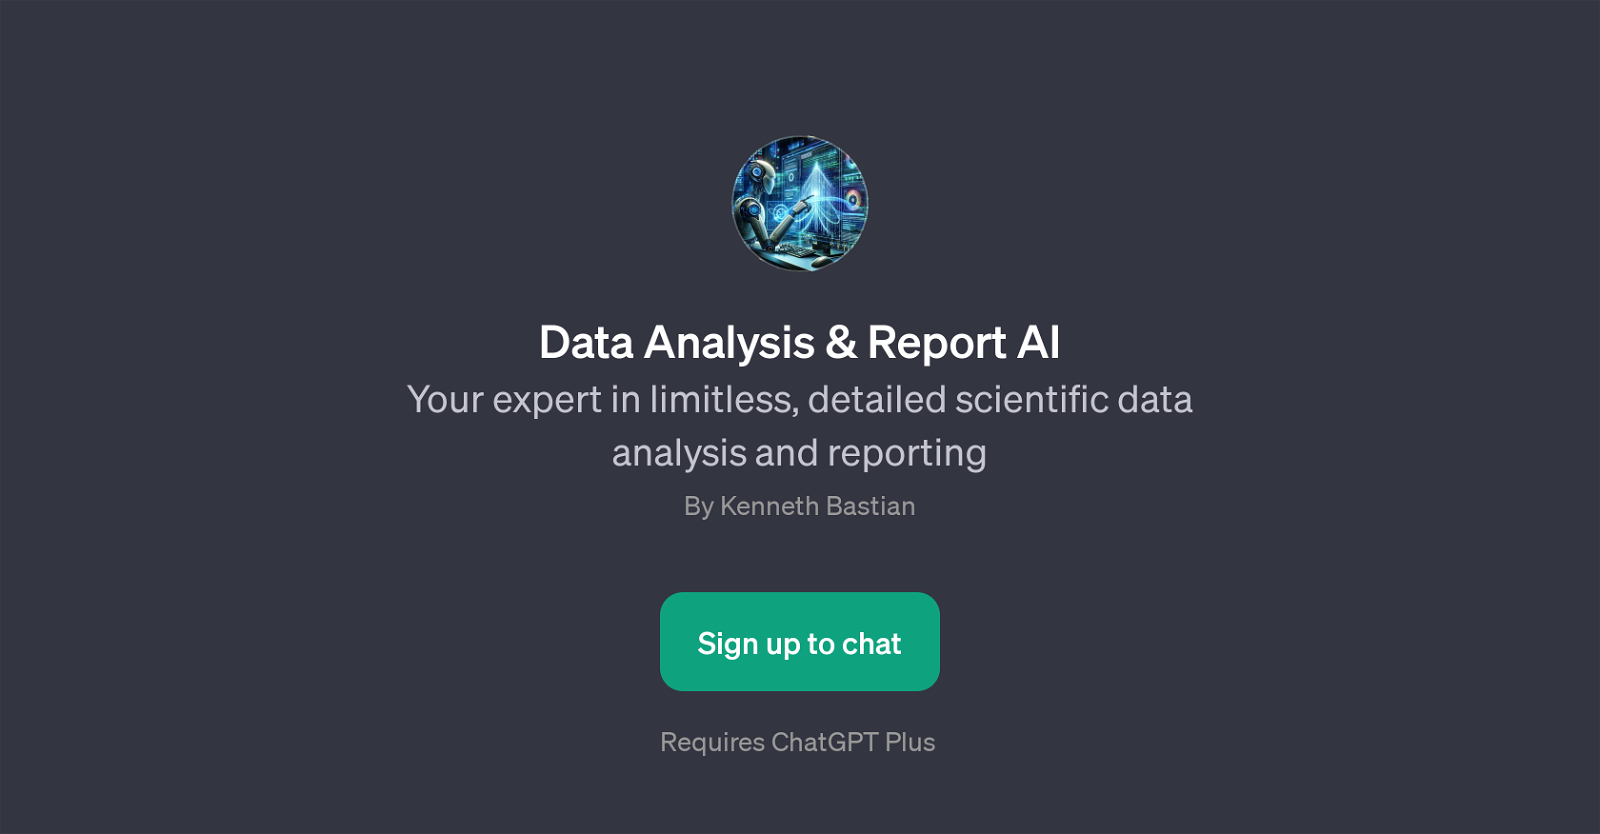 Data Analysis & Report AI website